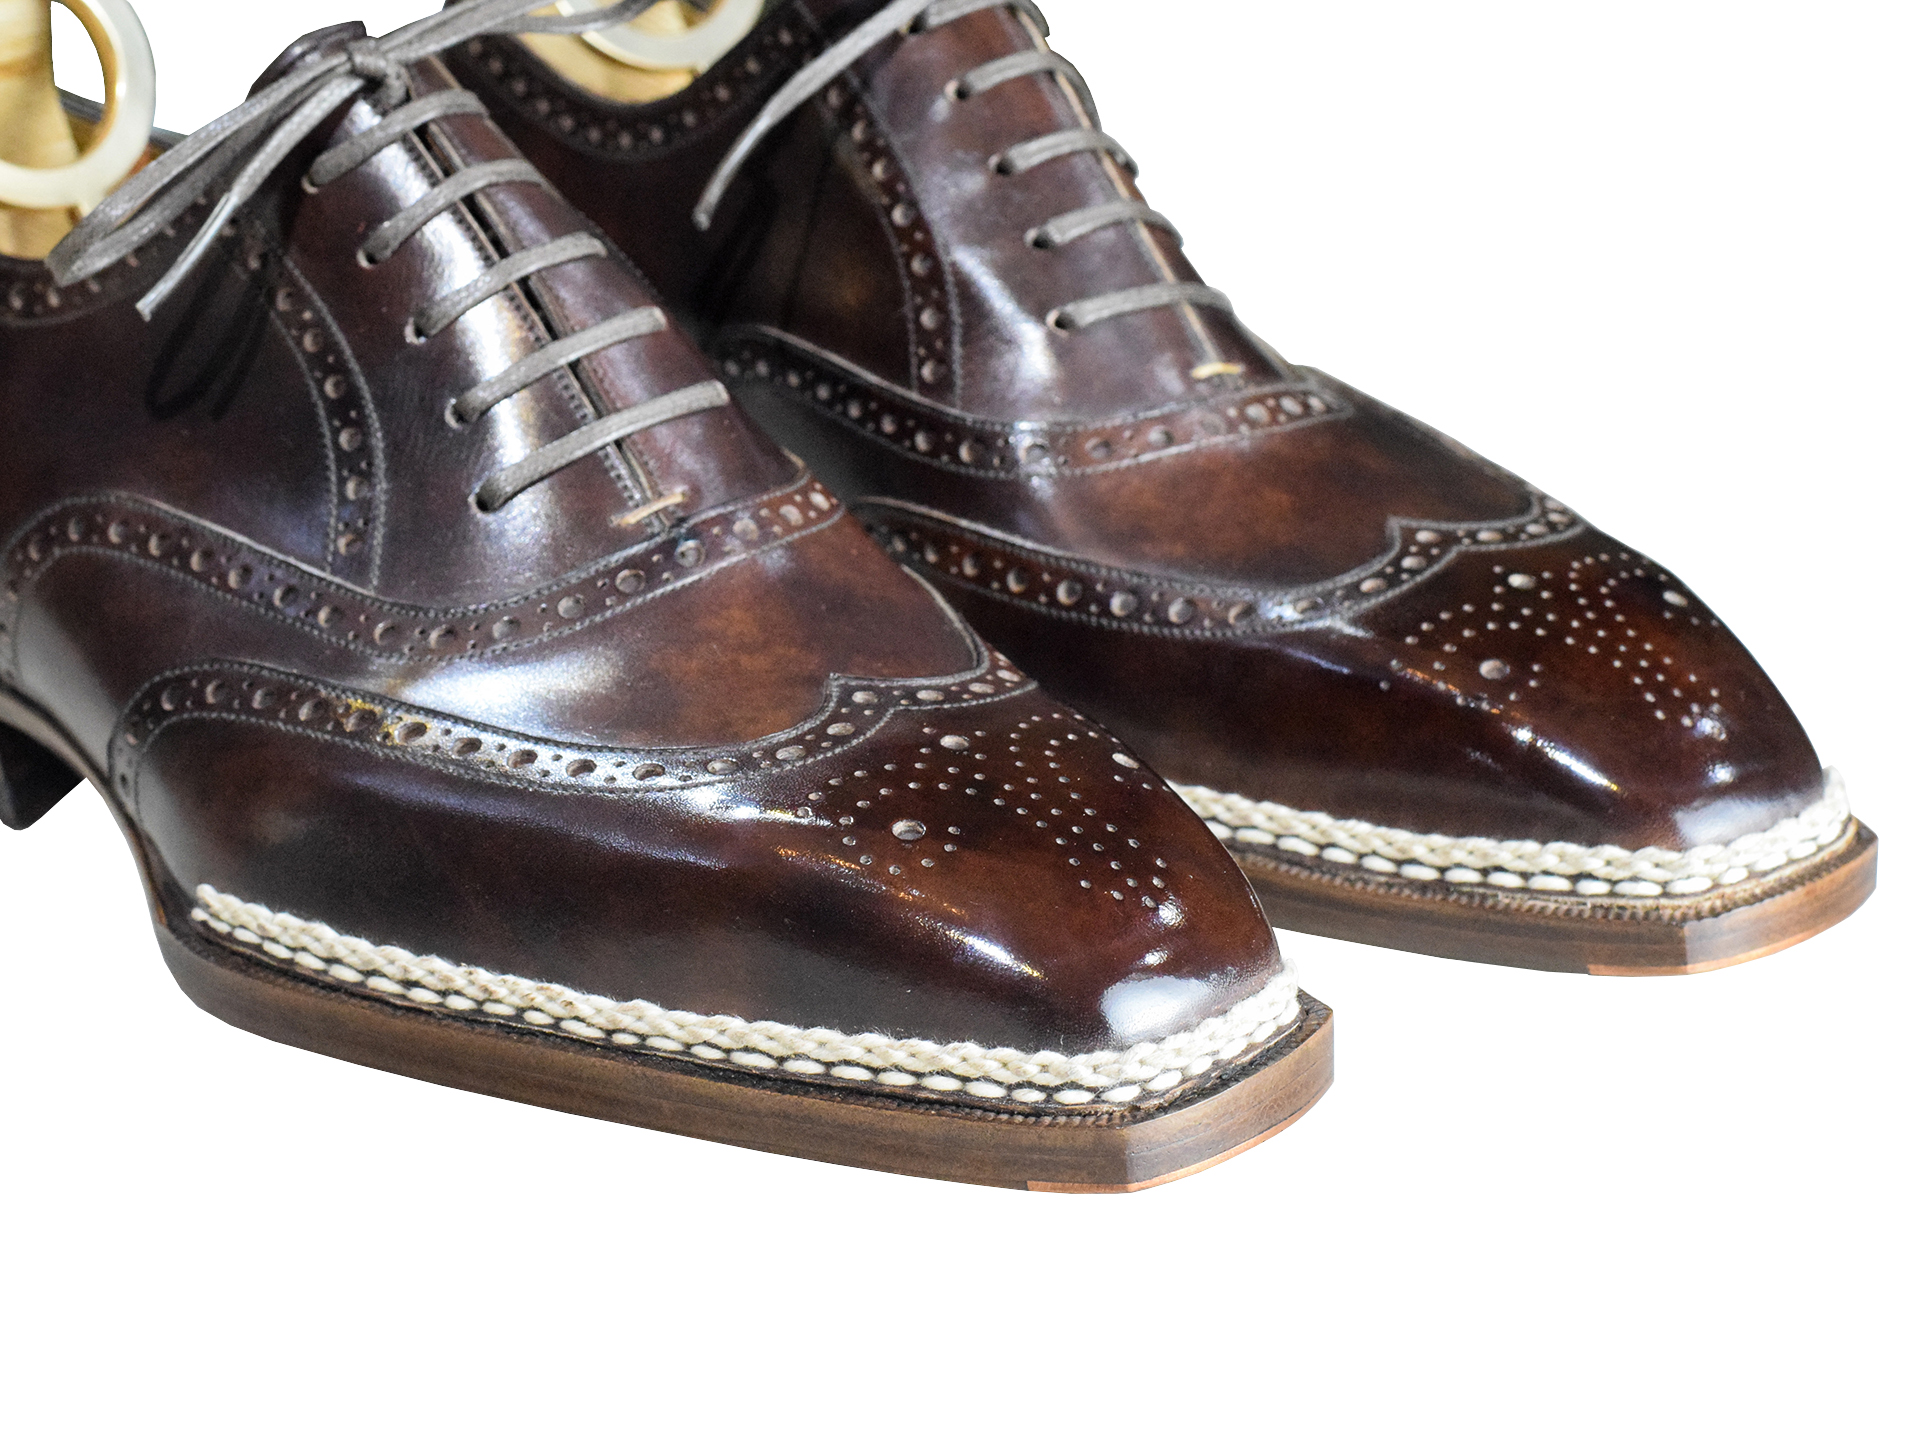 MTO Oxford Wingtip full brogue shoes - Premium line